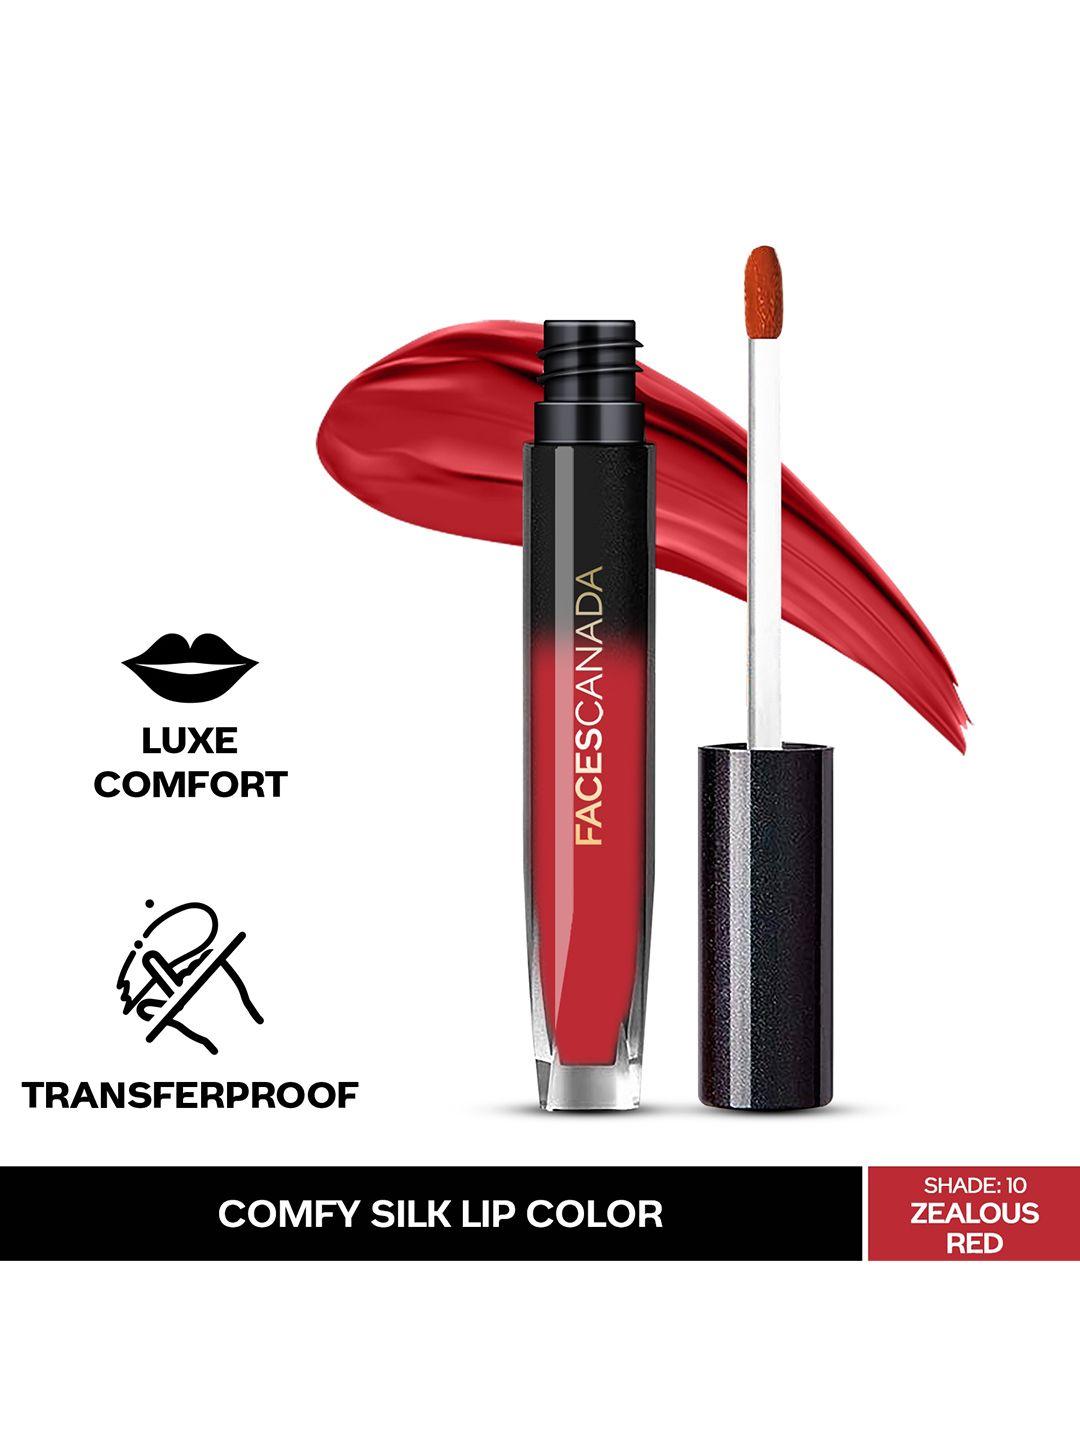 faces canada comfy silk lightweight & transfer-proof satin matte hd lip color -zealous red 10 - 3 ml